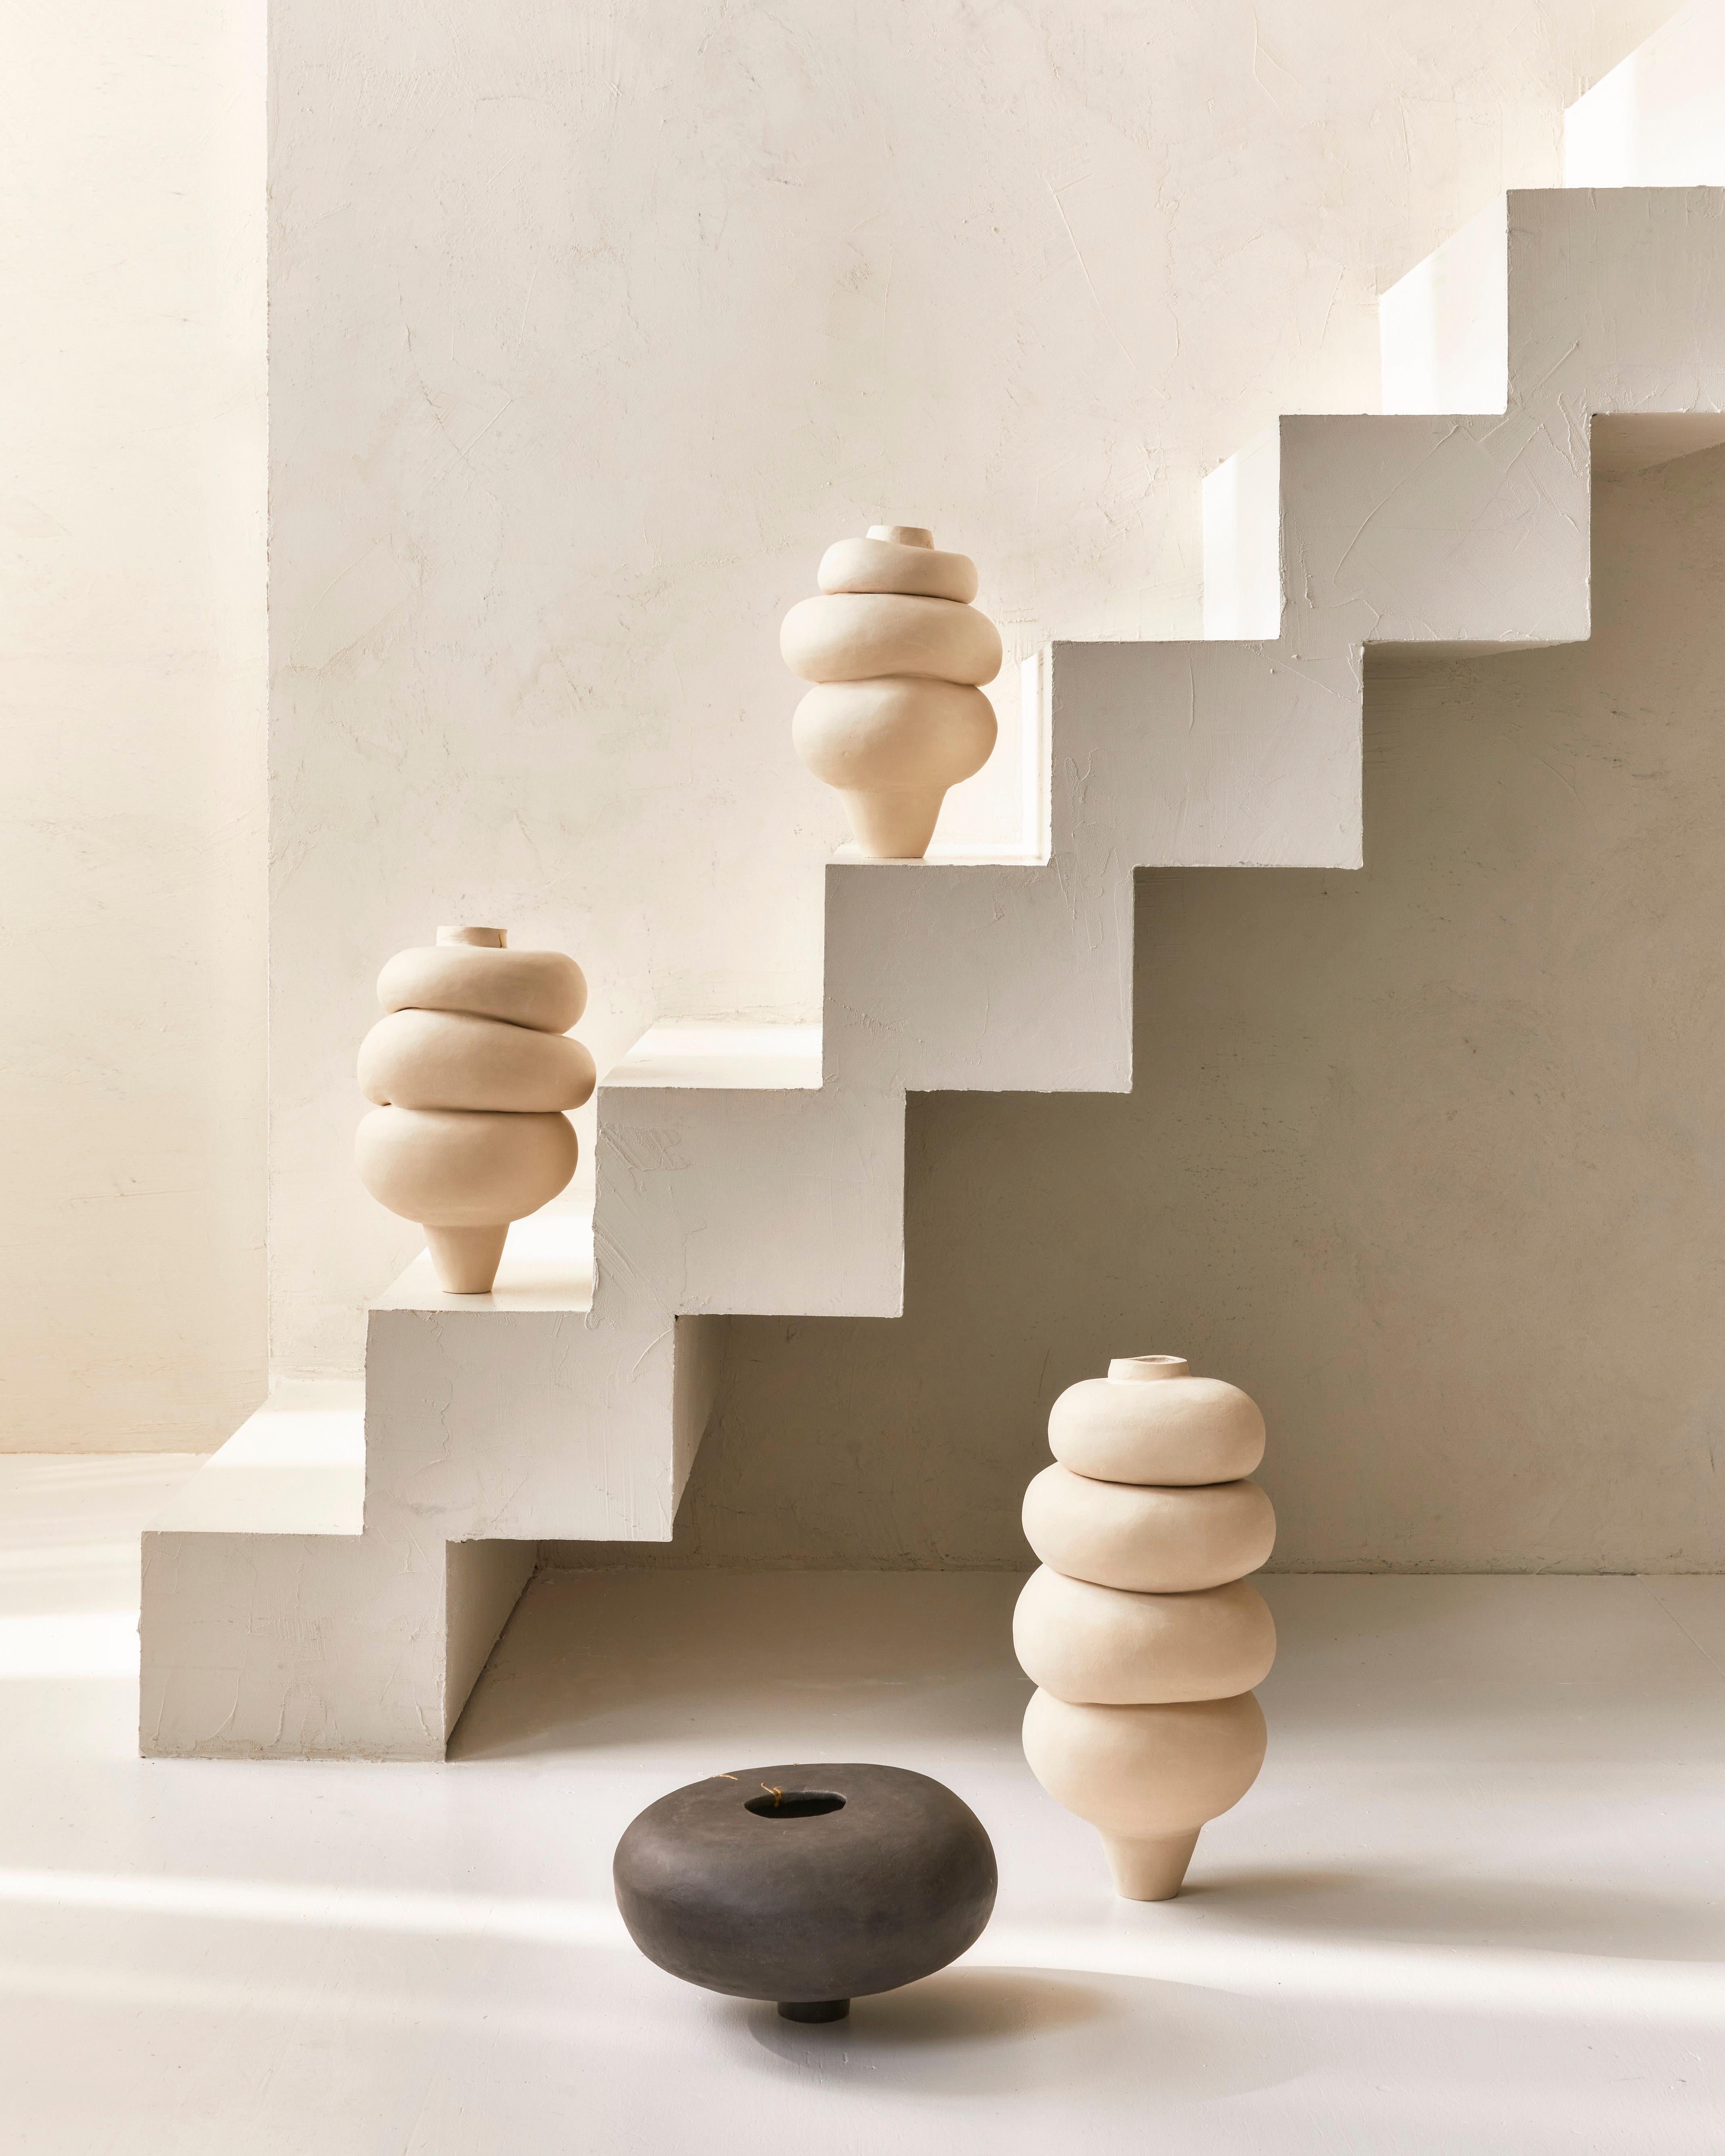 Dutch Contemporary Sculptural Ceramic Art Modder Calmness by Françoise Jeffrey For Sale 4